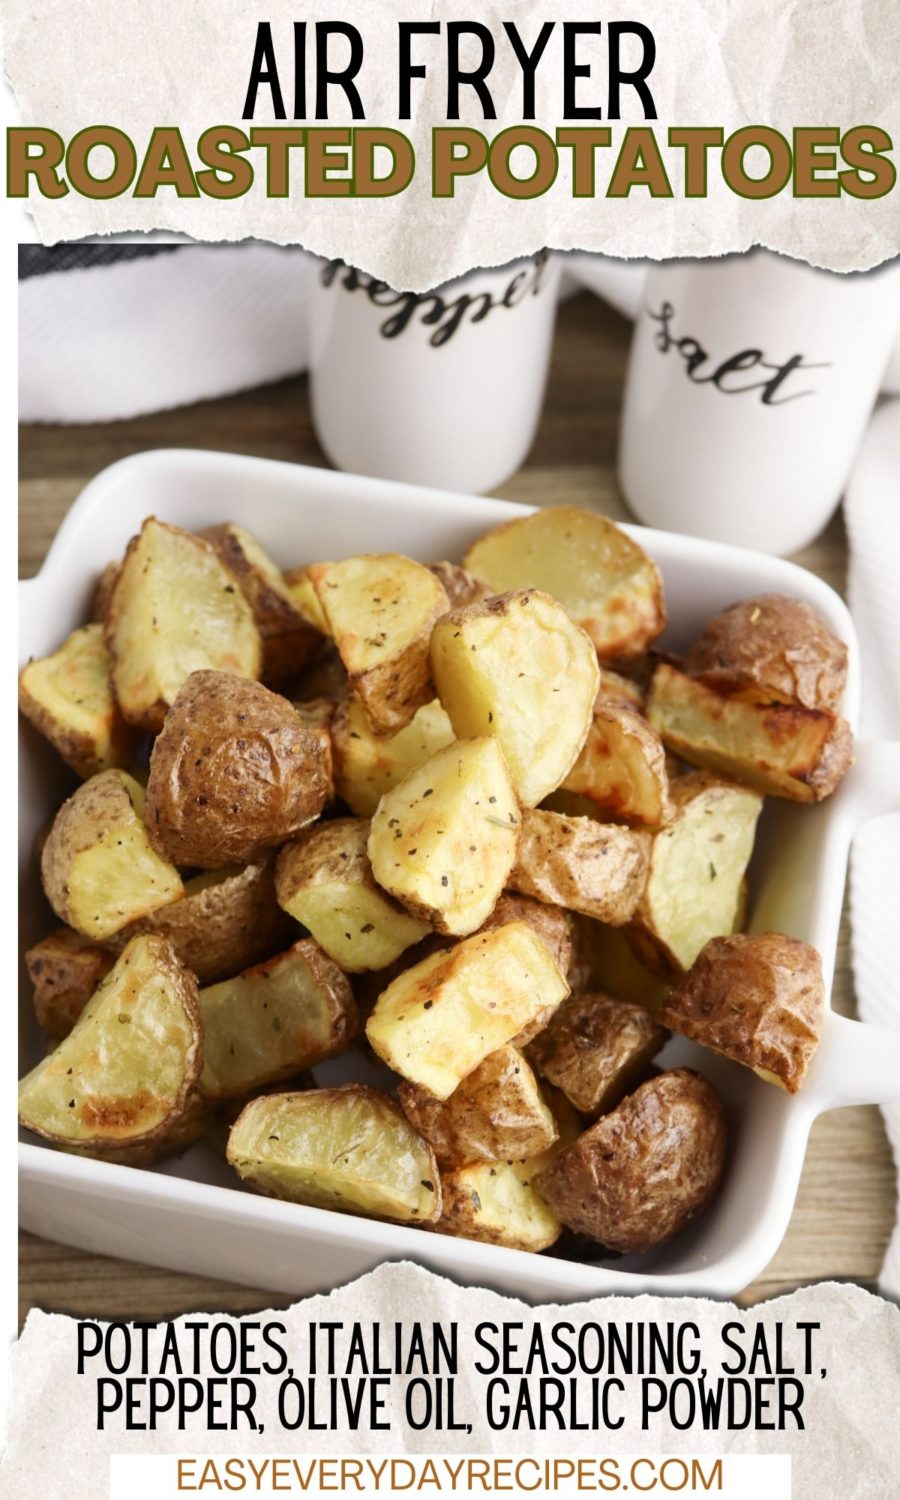 Air fryer roasted potatoes.